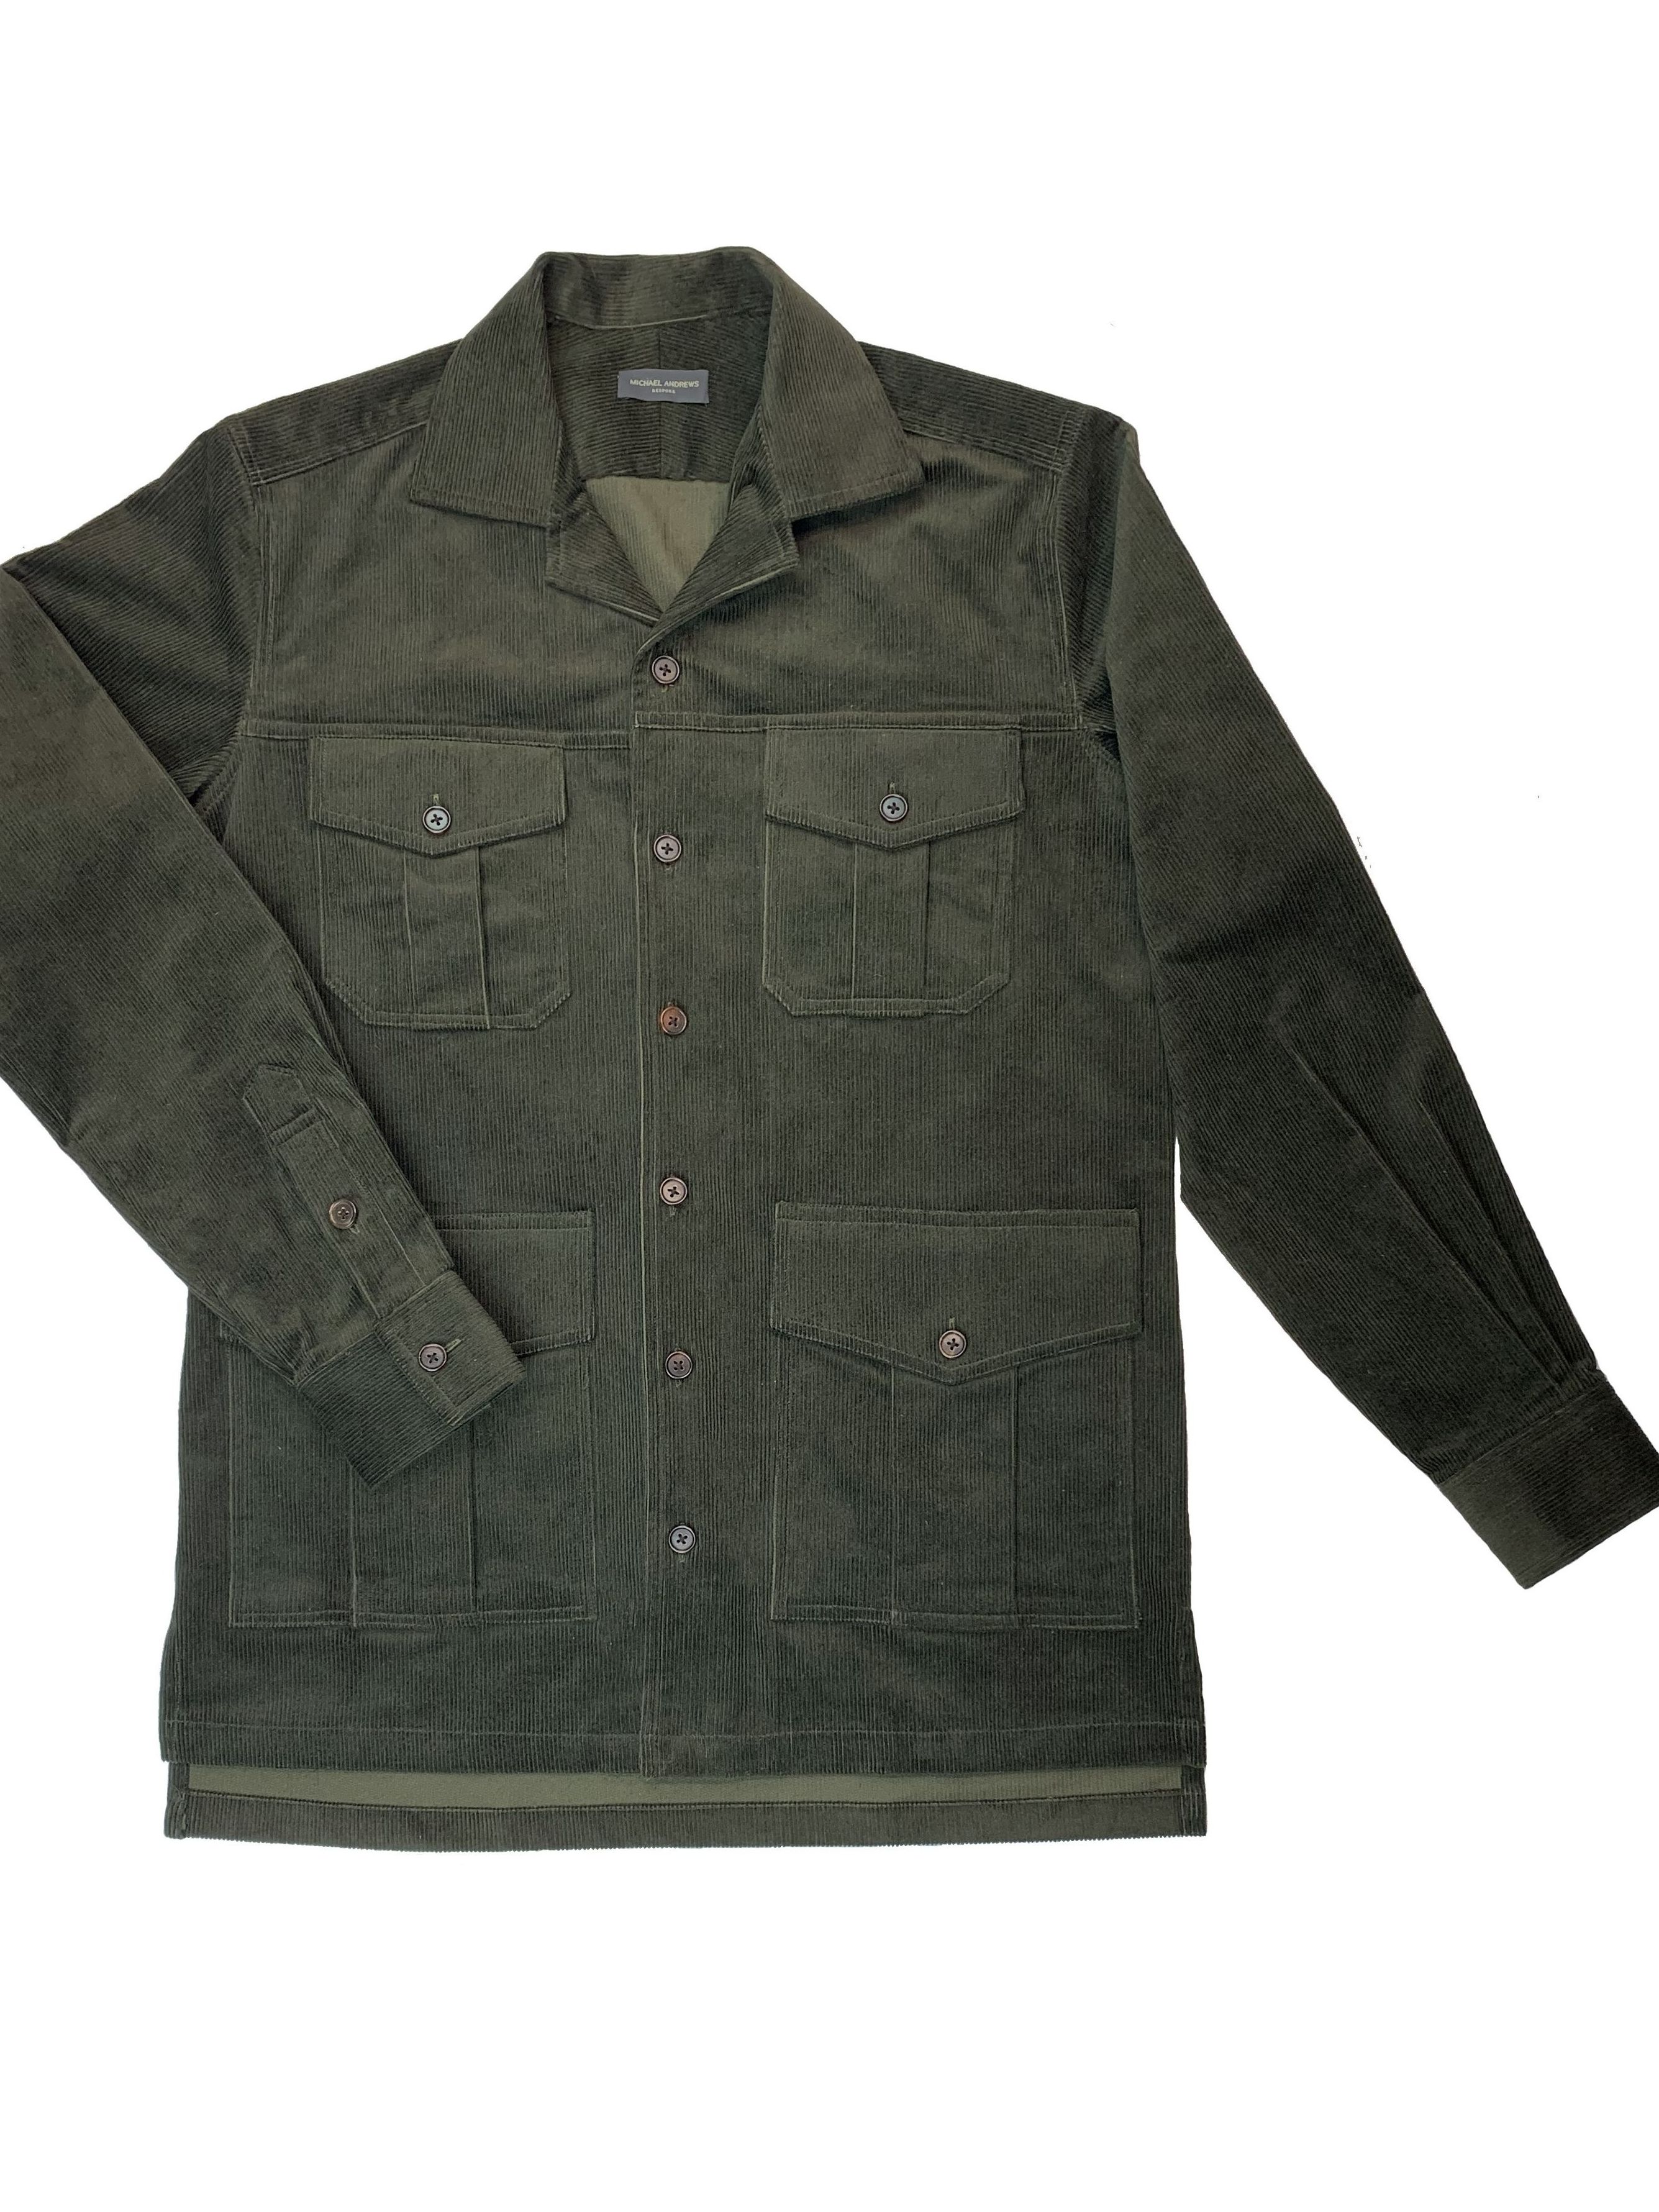 Hunter Green Stretch Corduroy Safari Shirt Jacket